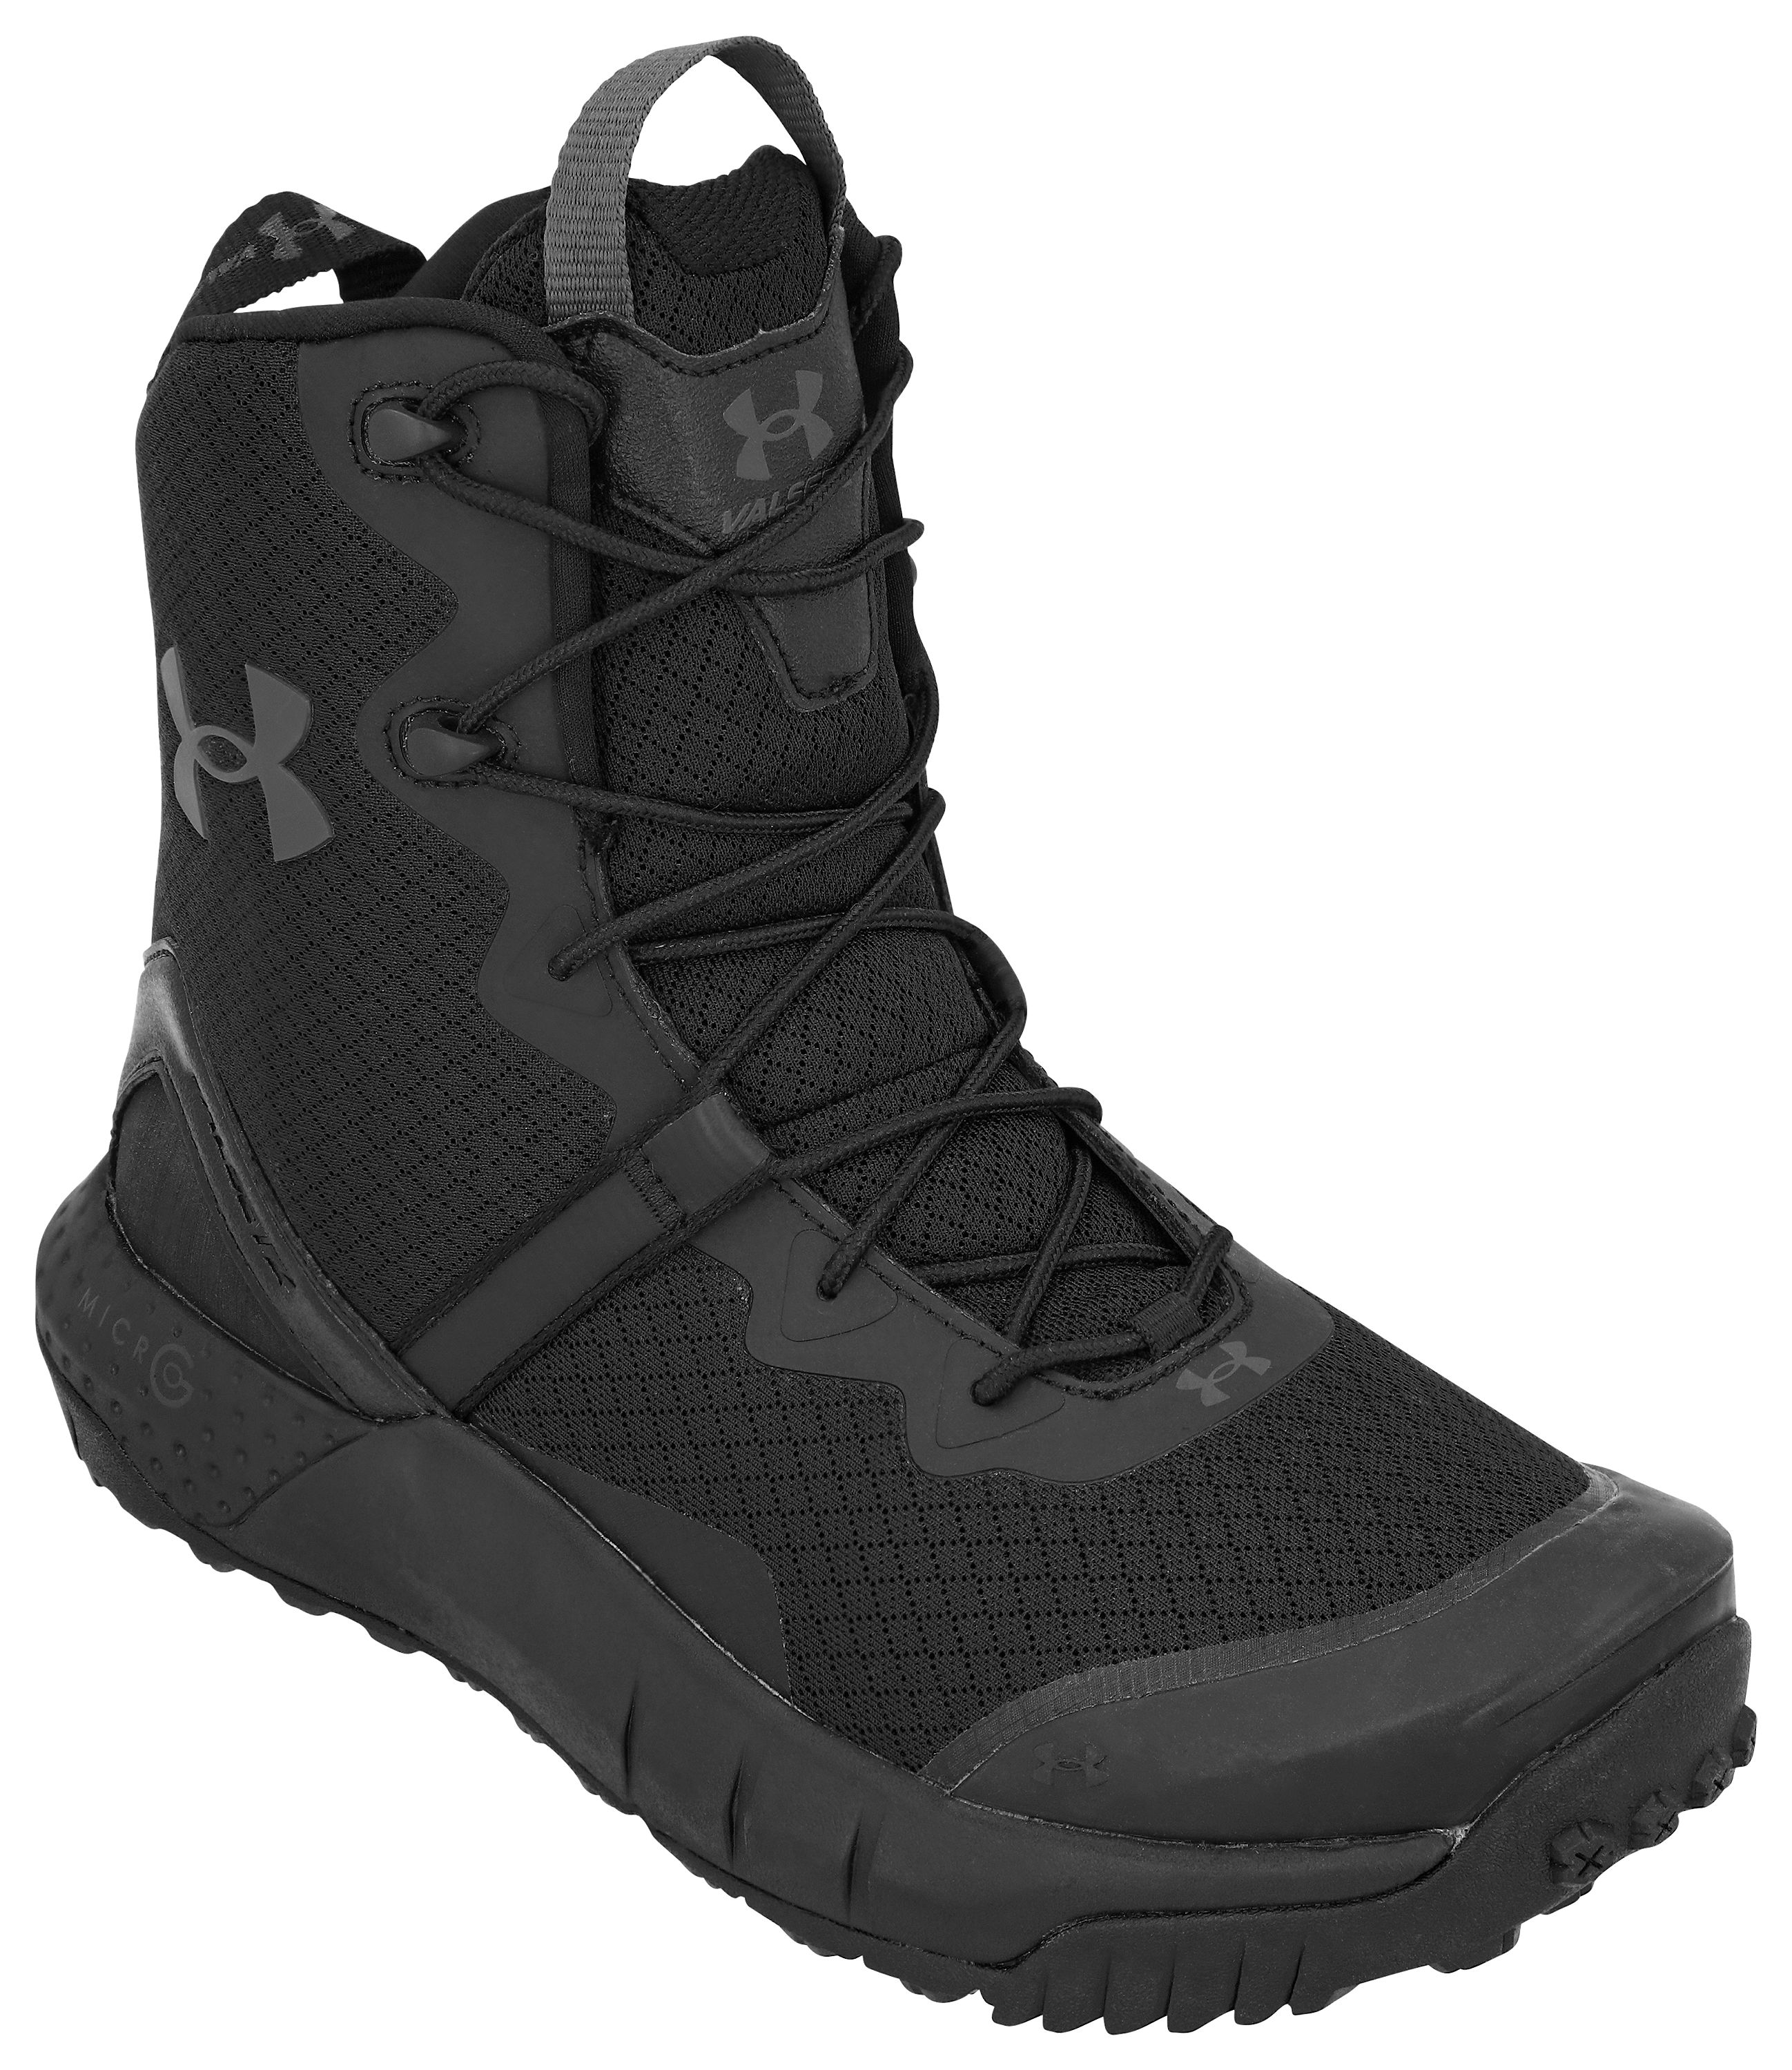 Under Armour Micro G Valsetz Side Zip Tactical Boots for Men - Black - 11 5M